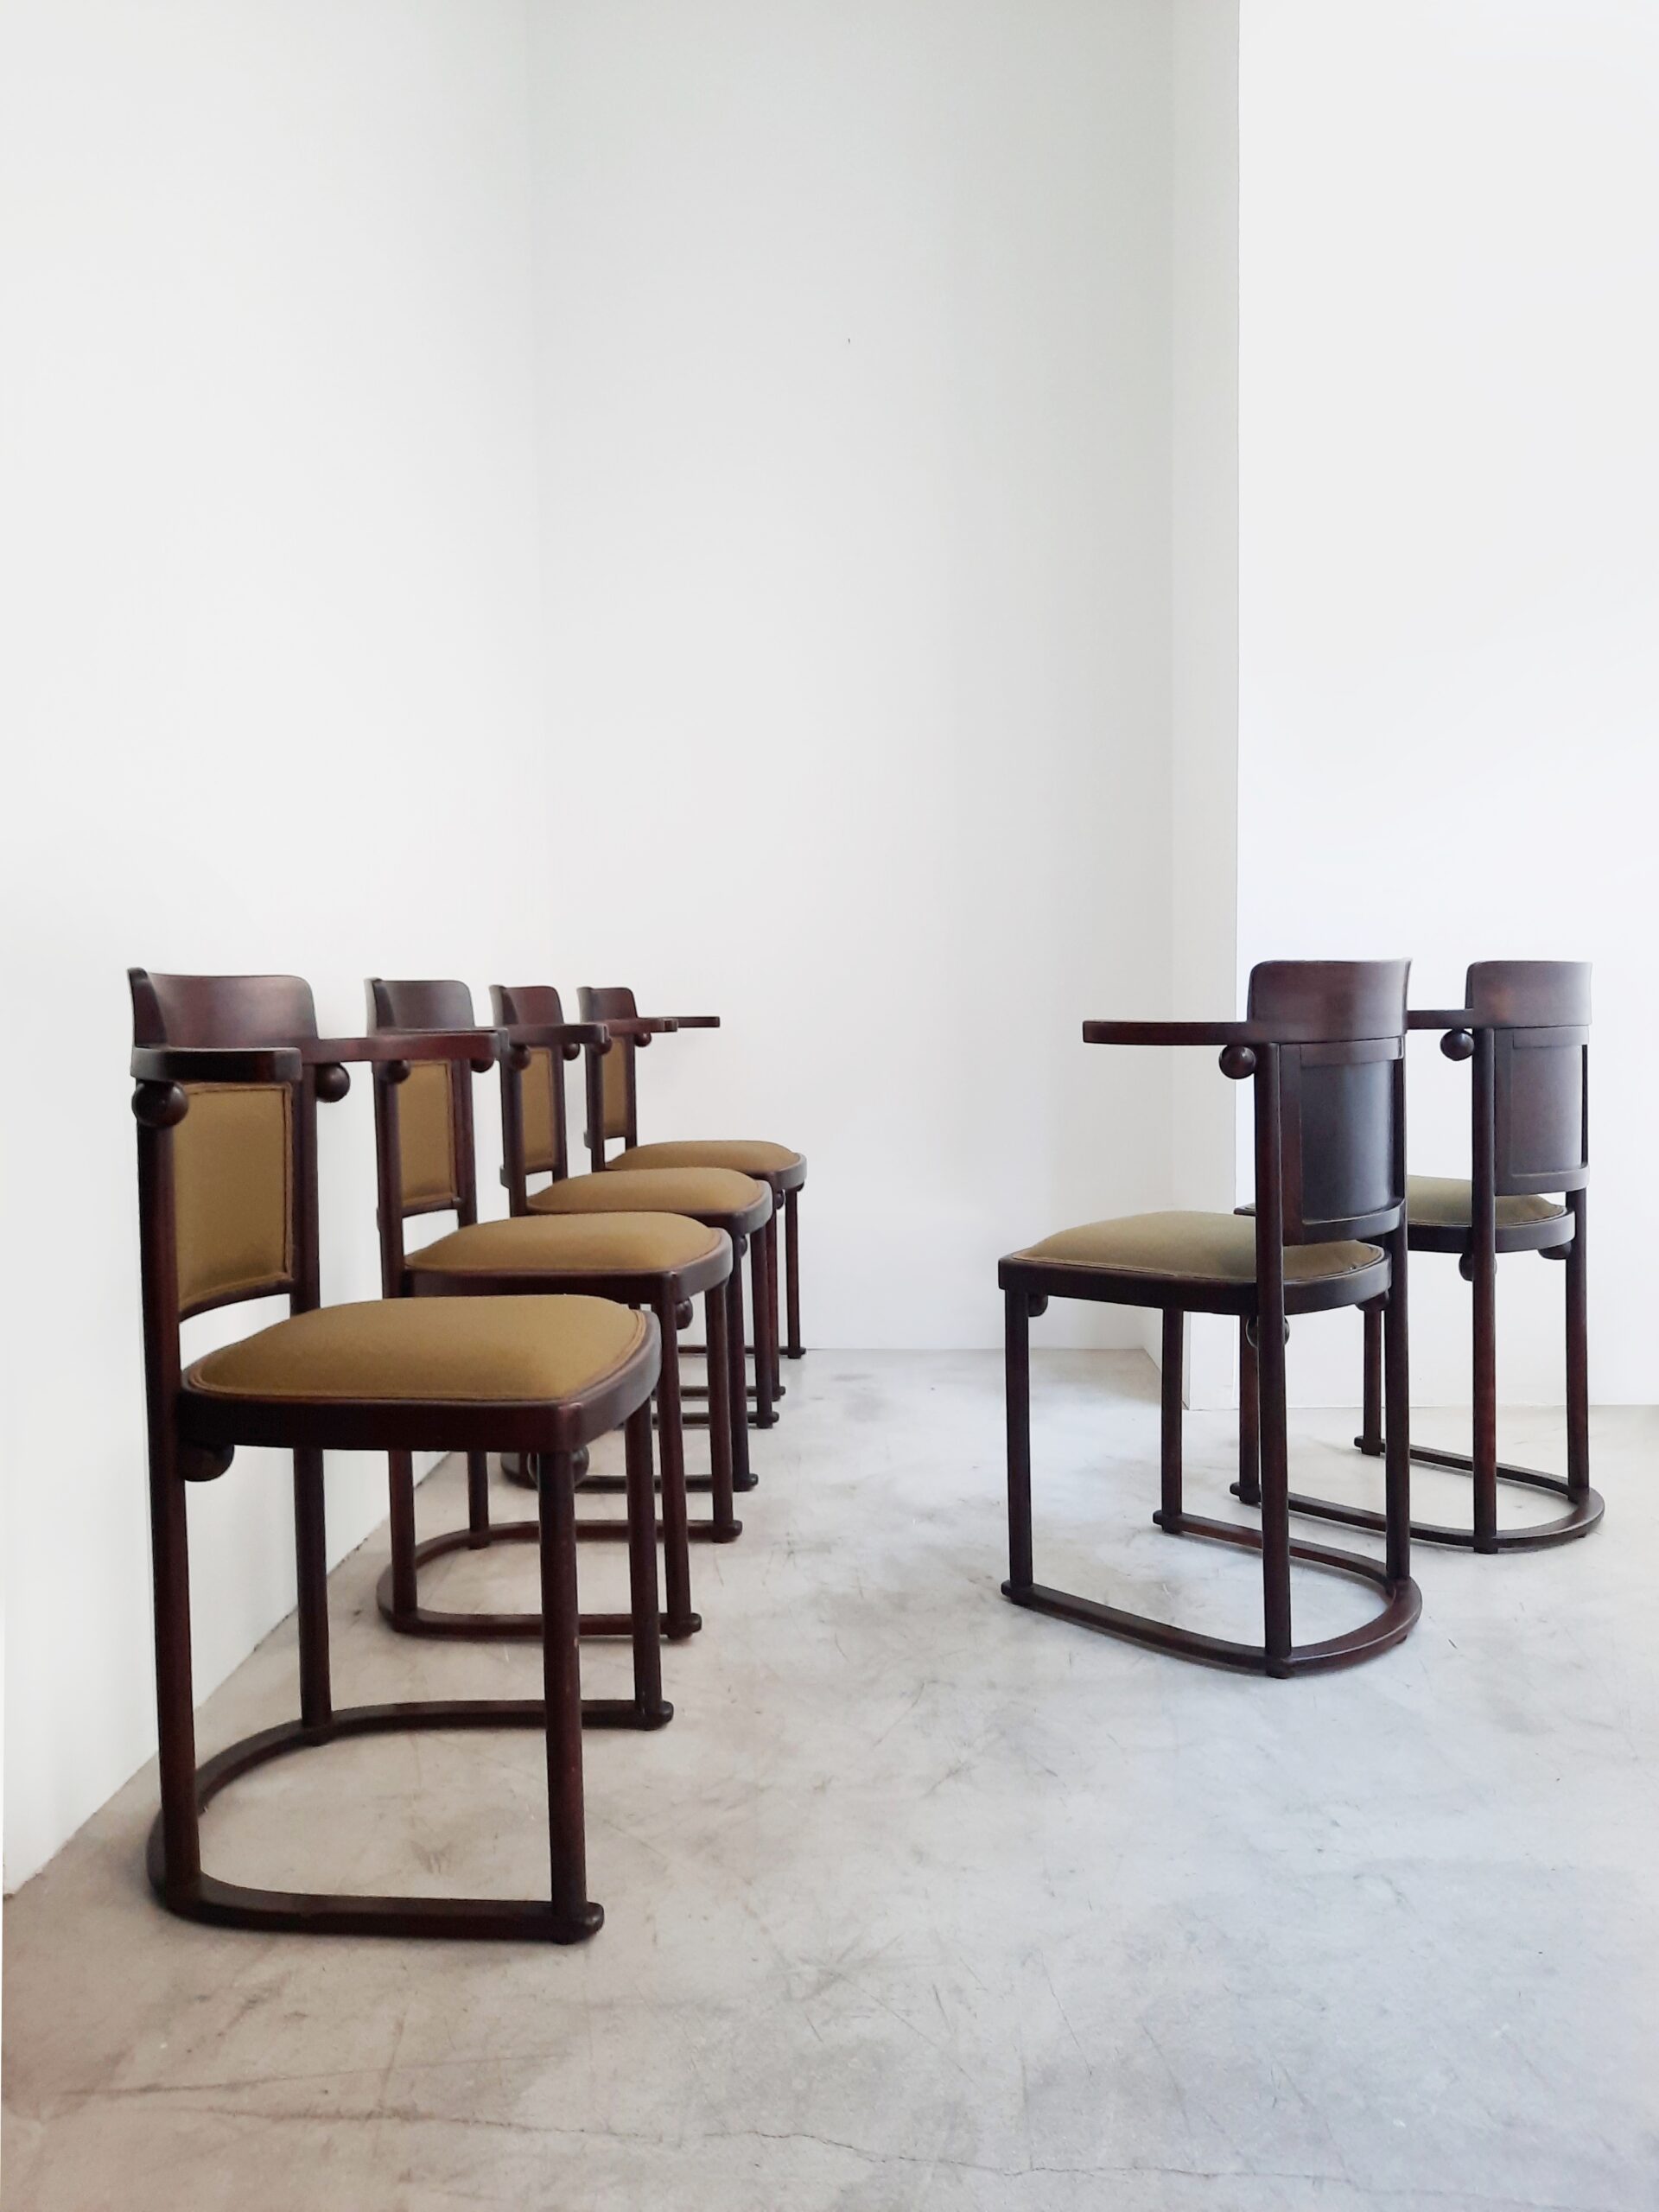 Set of 6 chairs “Fledermaus” HOFFMANN Josef